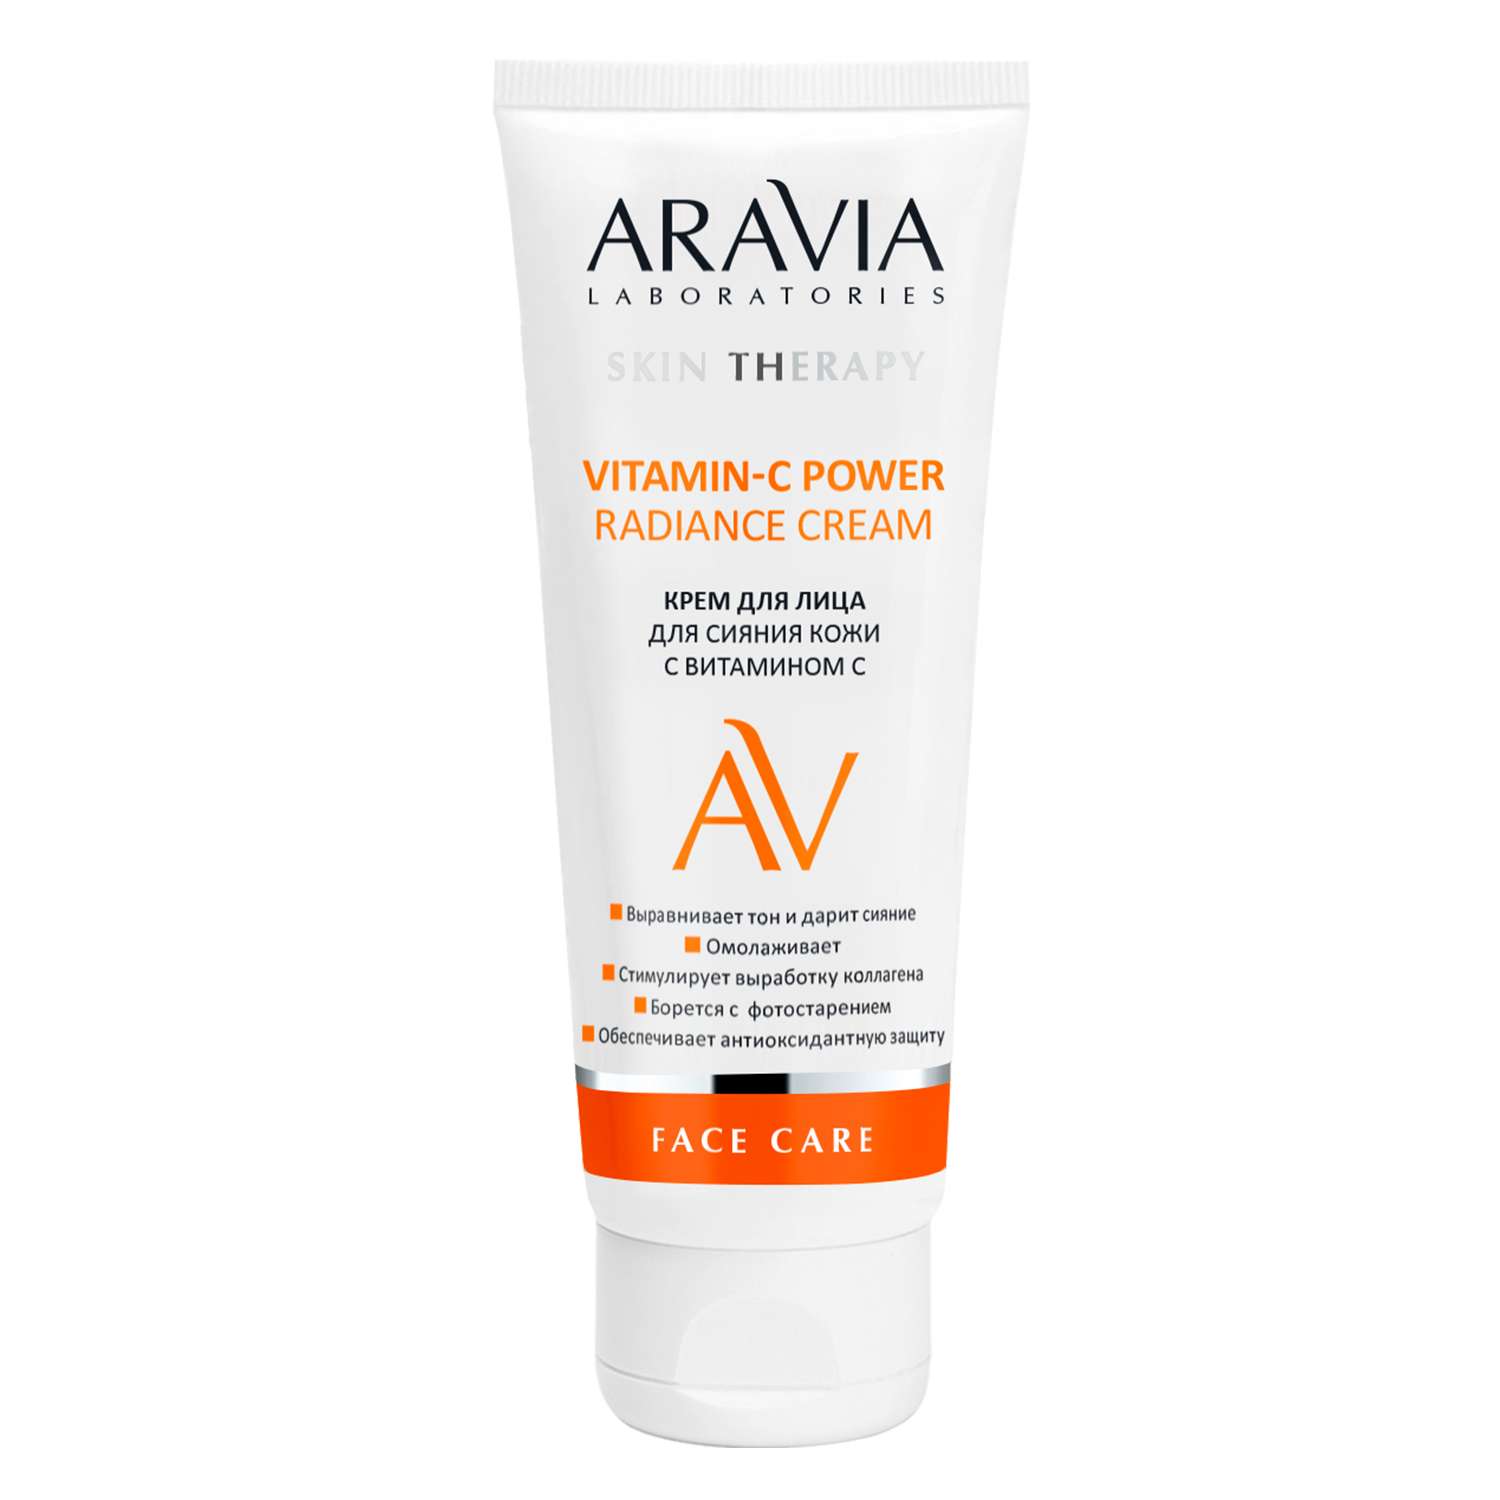 Крем для лица ARAVIA Laboratories для сияния кожи с Витамином С Vitamin-C Power Radiance Cream 50 мл - фото 2